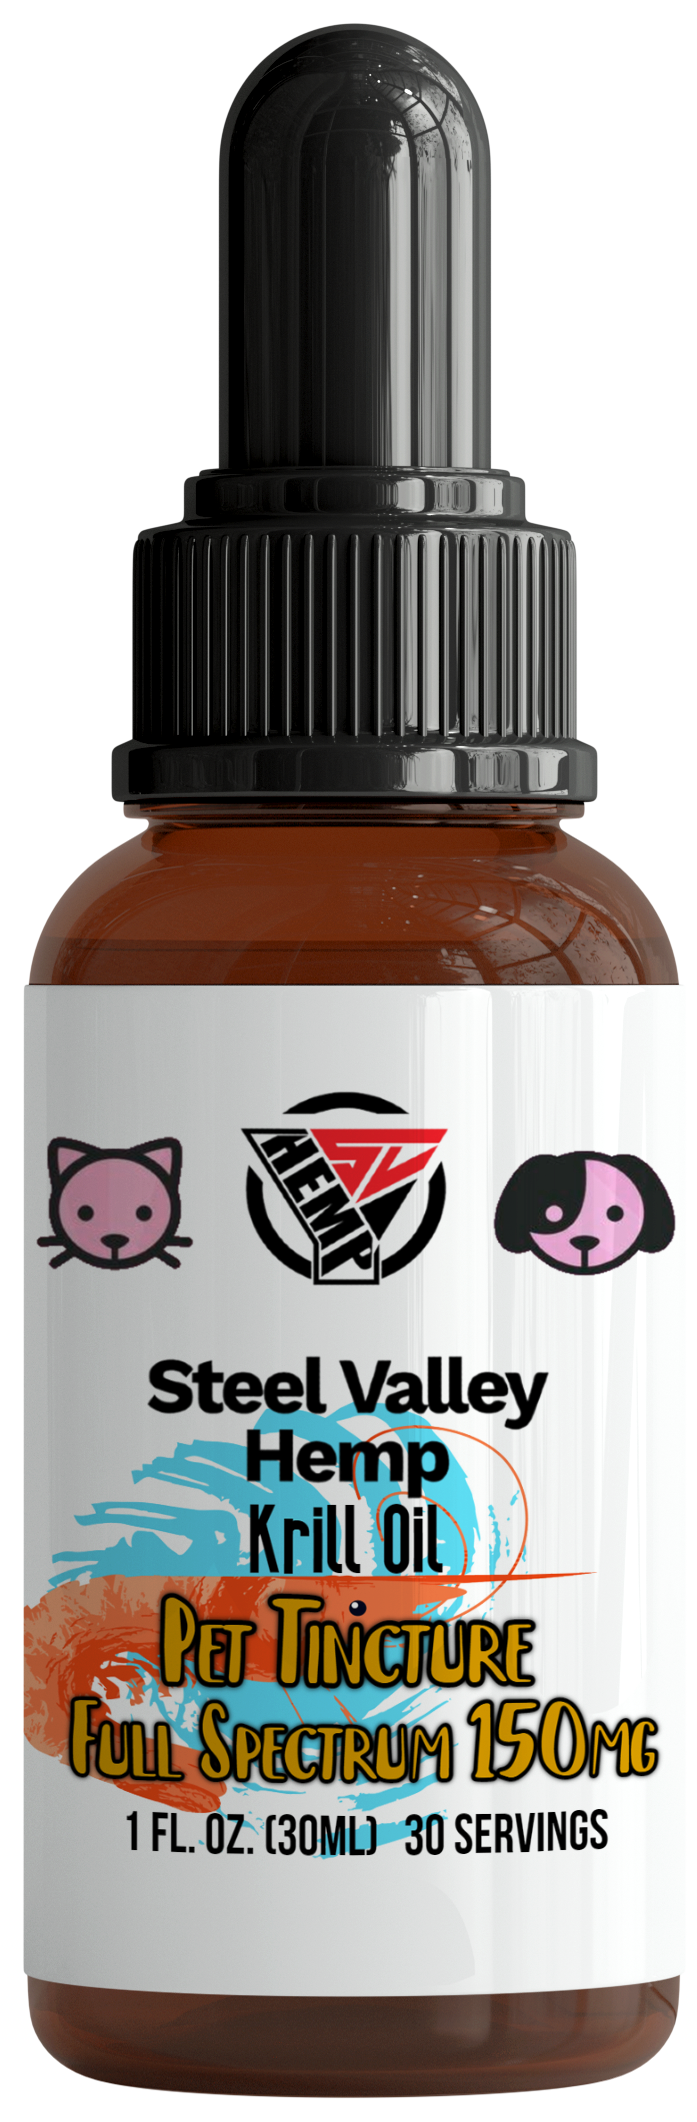 Steel Valley Hemp Full Spectrum Tincture Pets - Krill and Extra Virgin Oil 150Mg